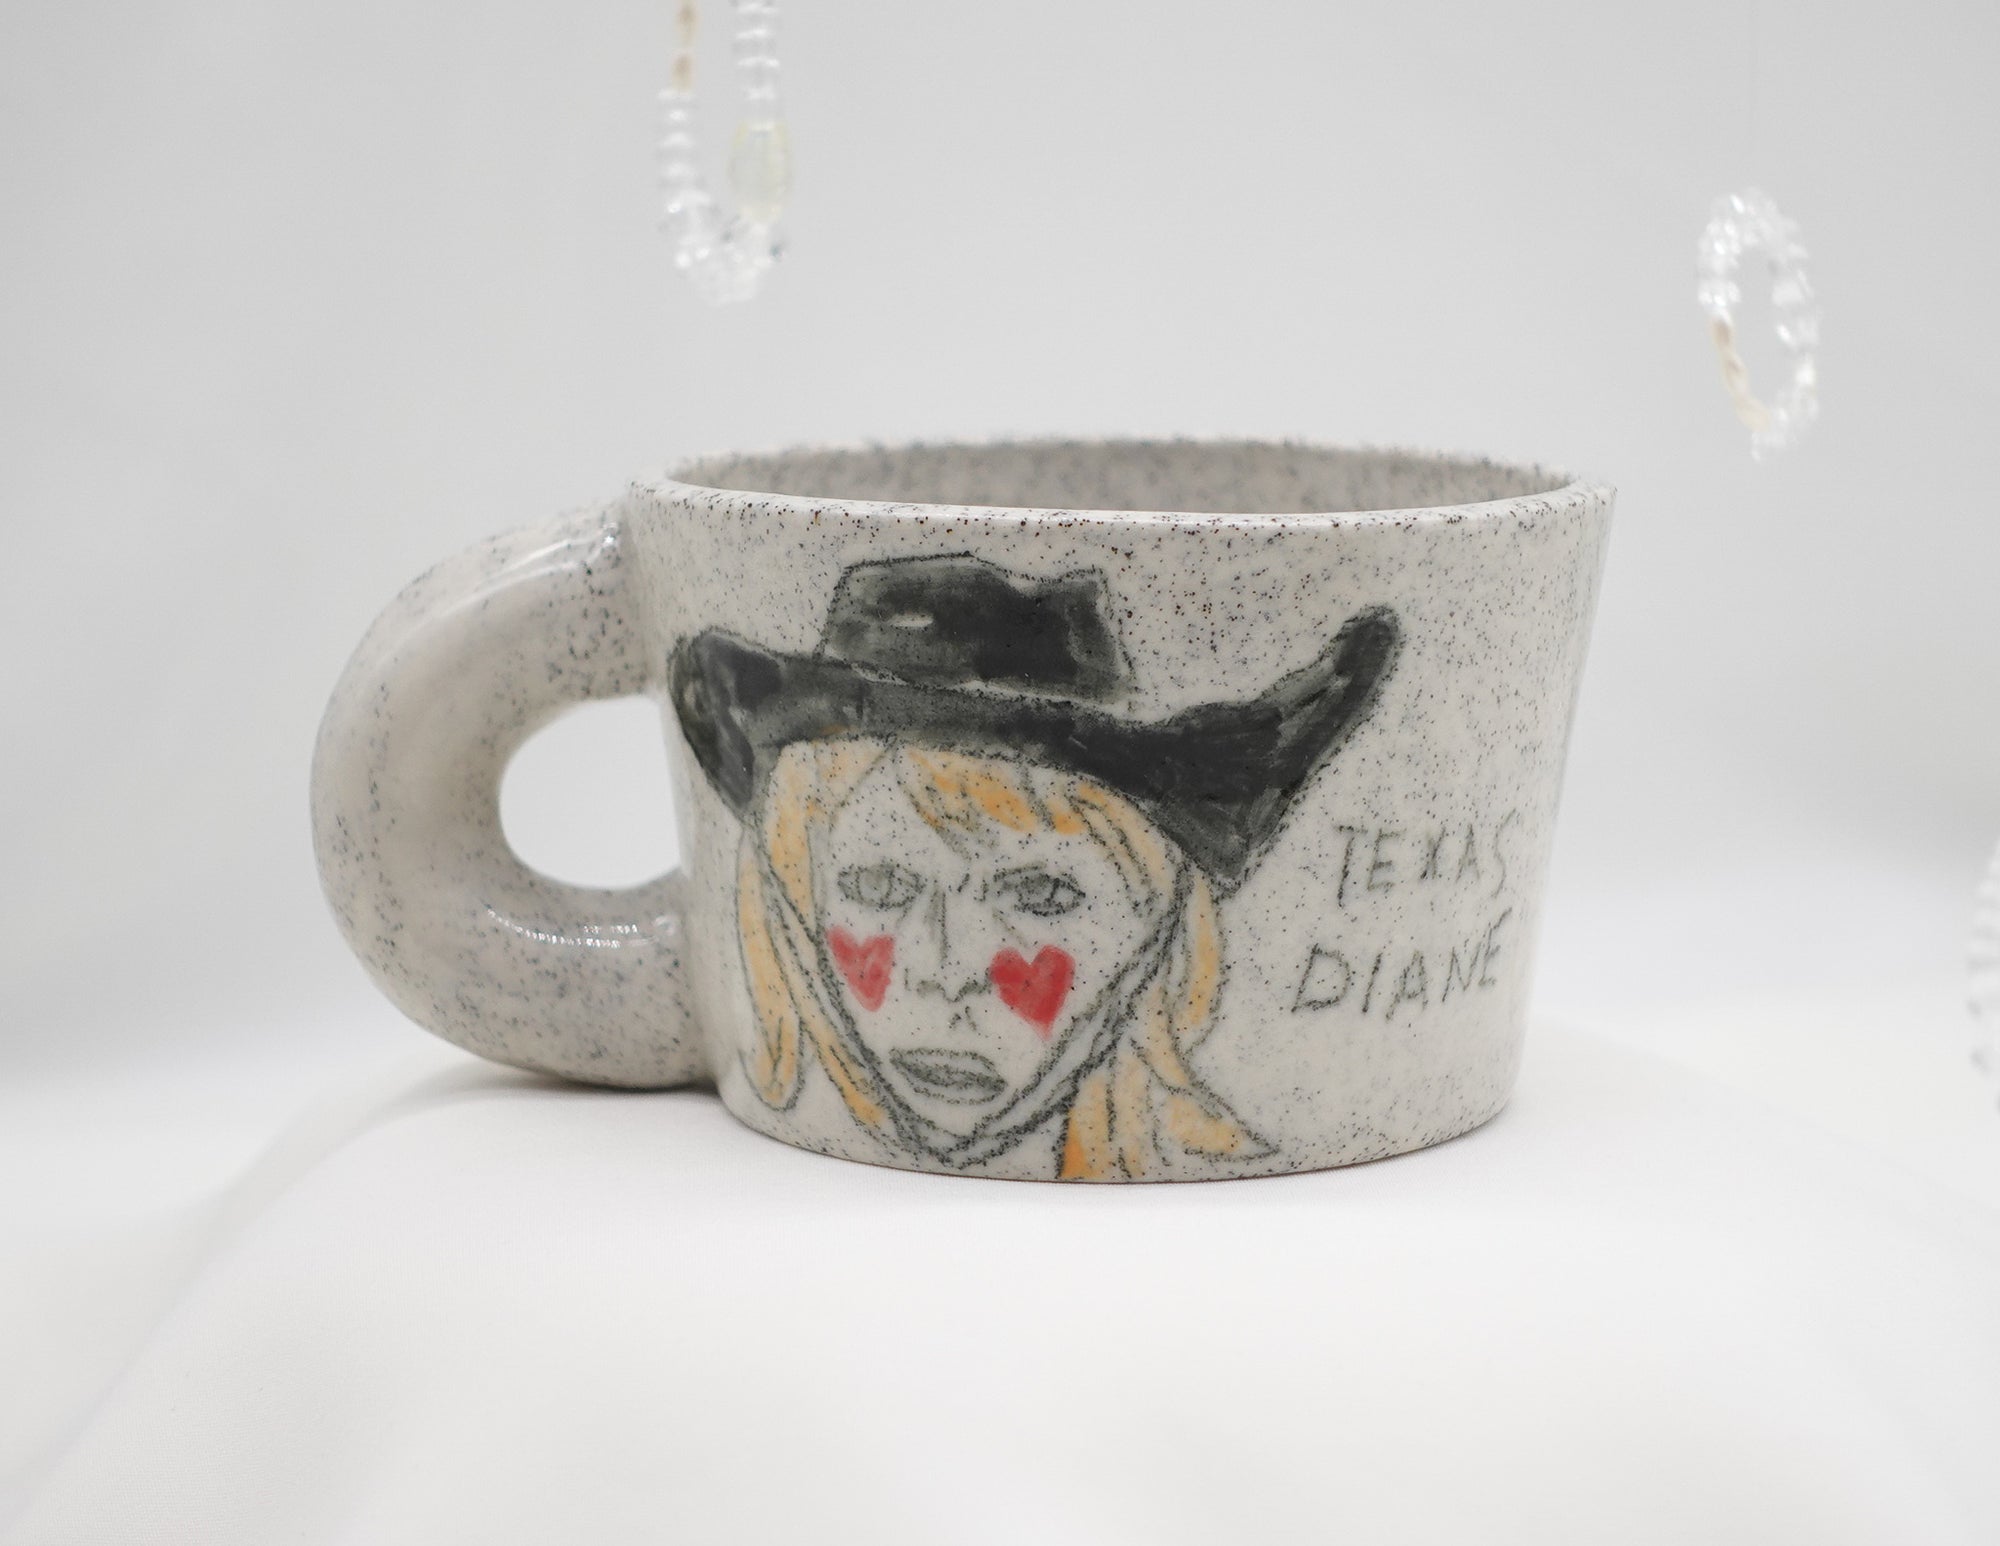 Texas Diane Espresso Cup